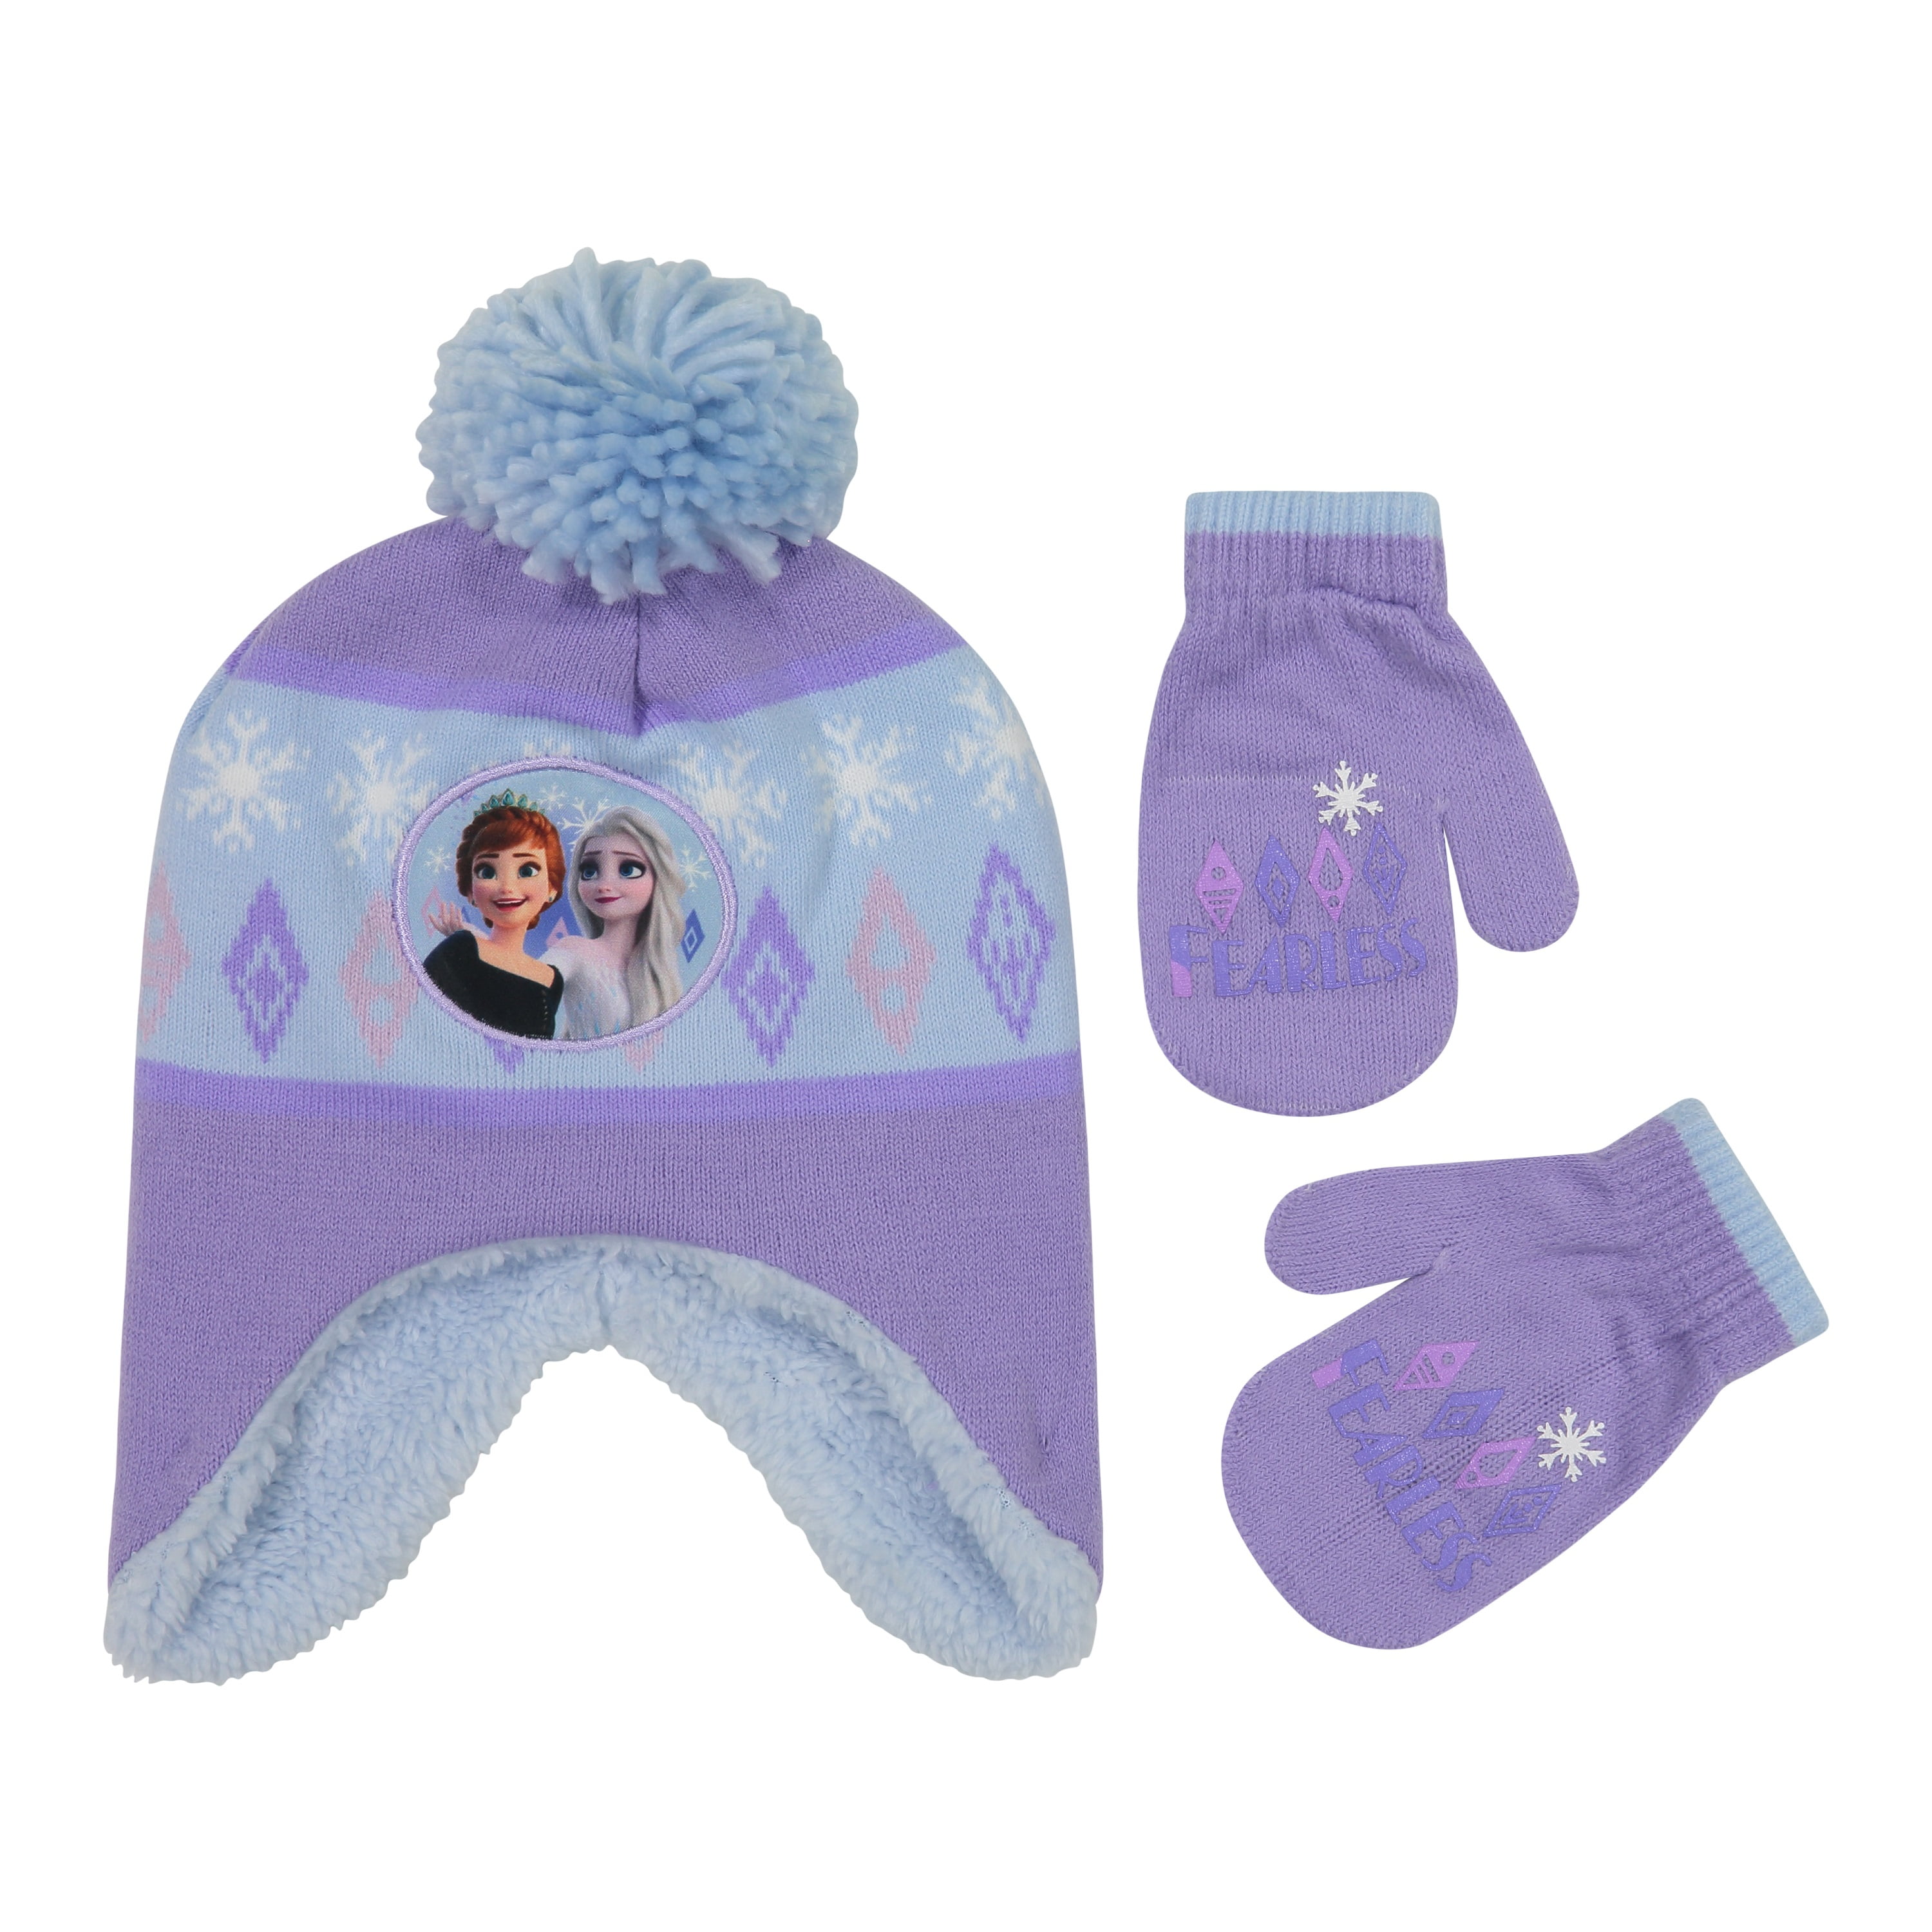 DISNEY FROZEN 2 ANNA & ELSA Knit Sublimated Beanie Winter Hat & Mittens Set  $24 